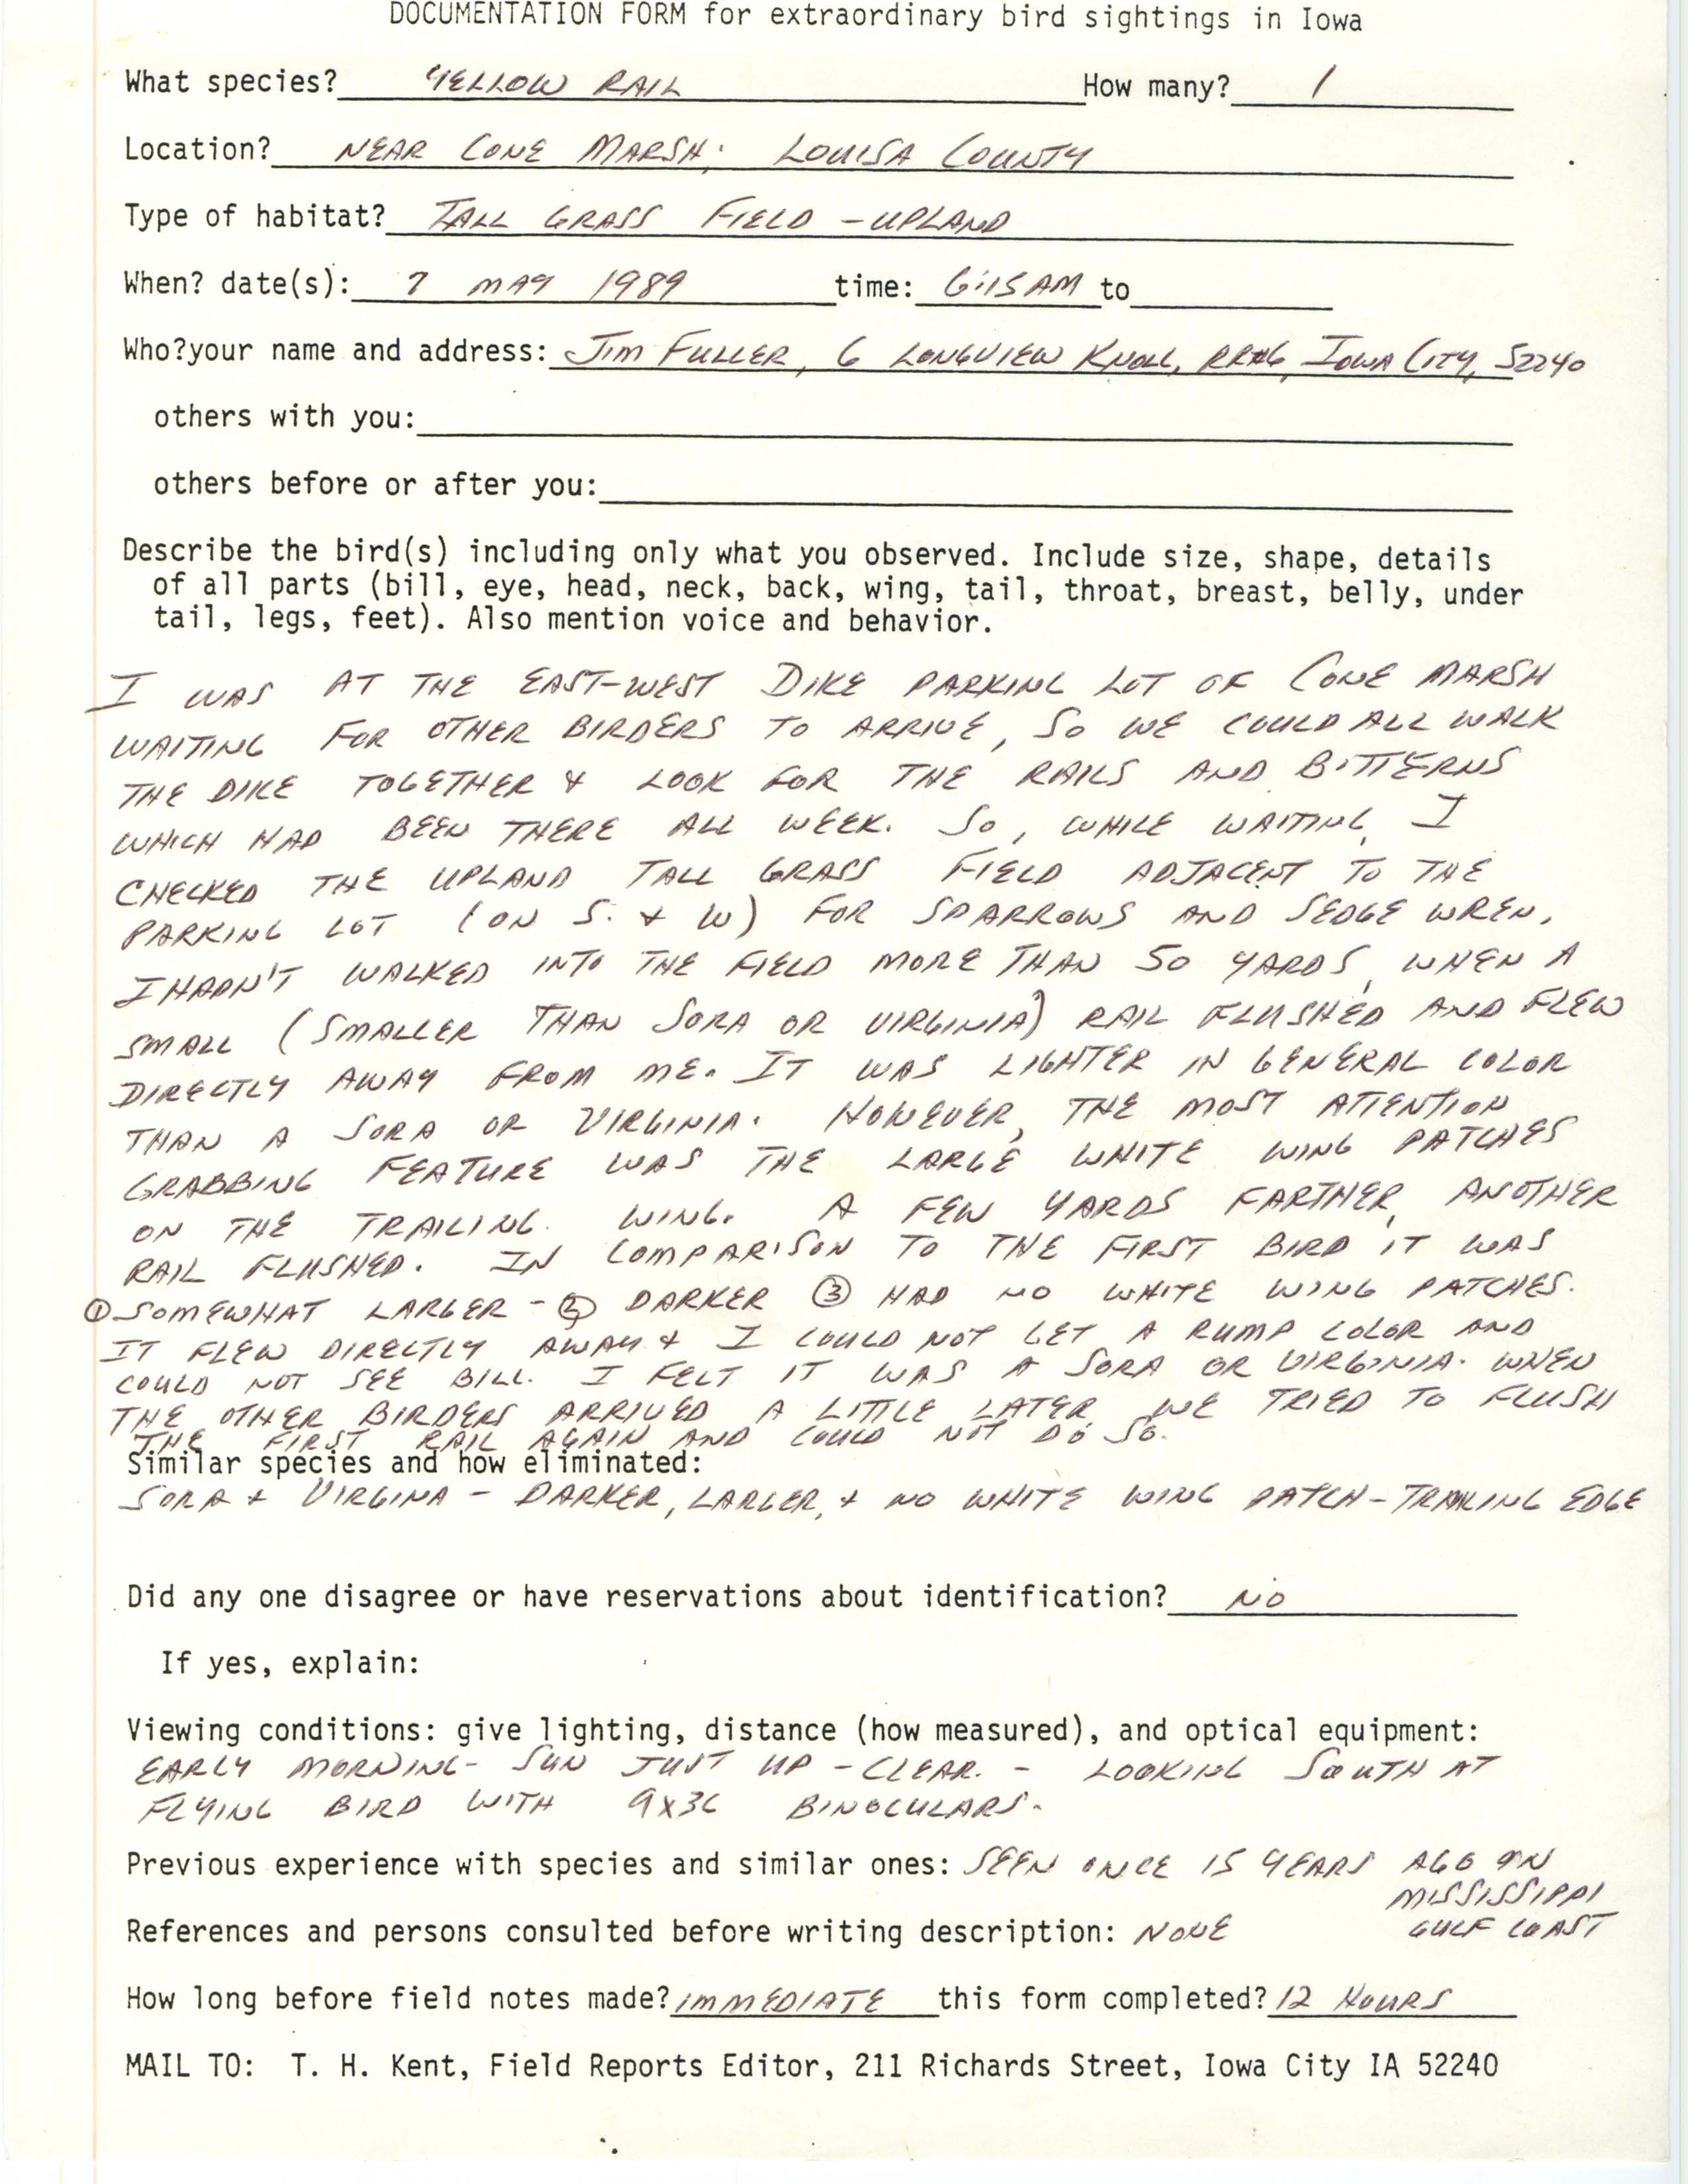 Rare bird documentation form for Yellow Rail near Cone Marsh, 1989